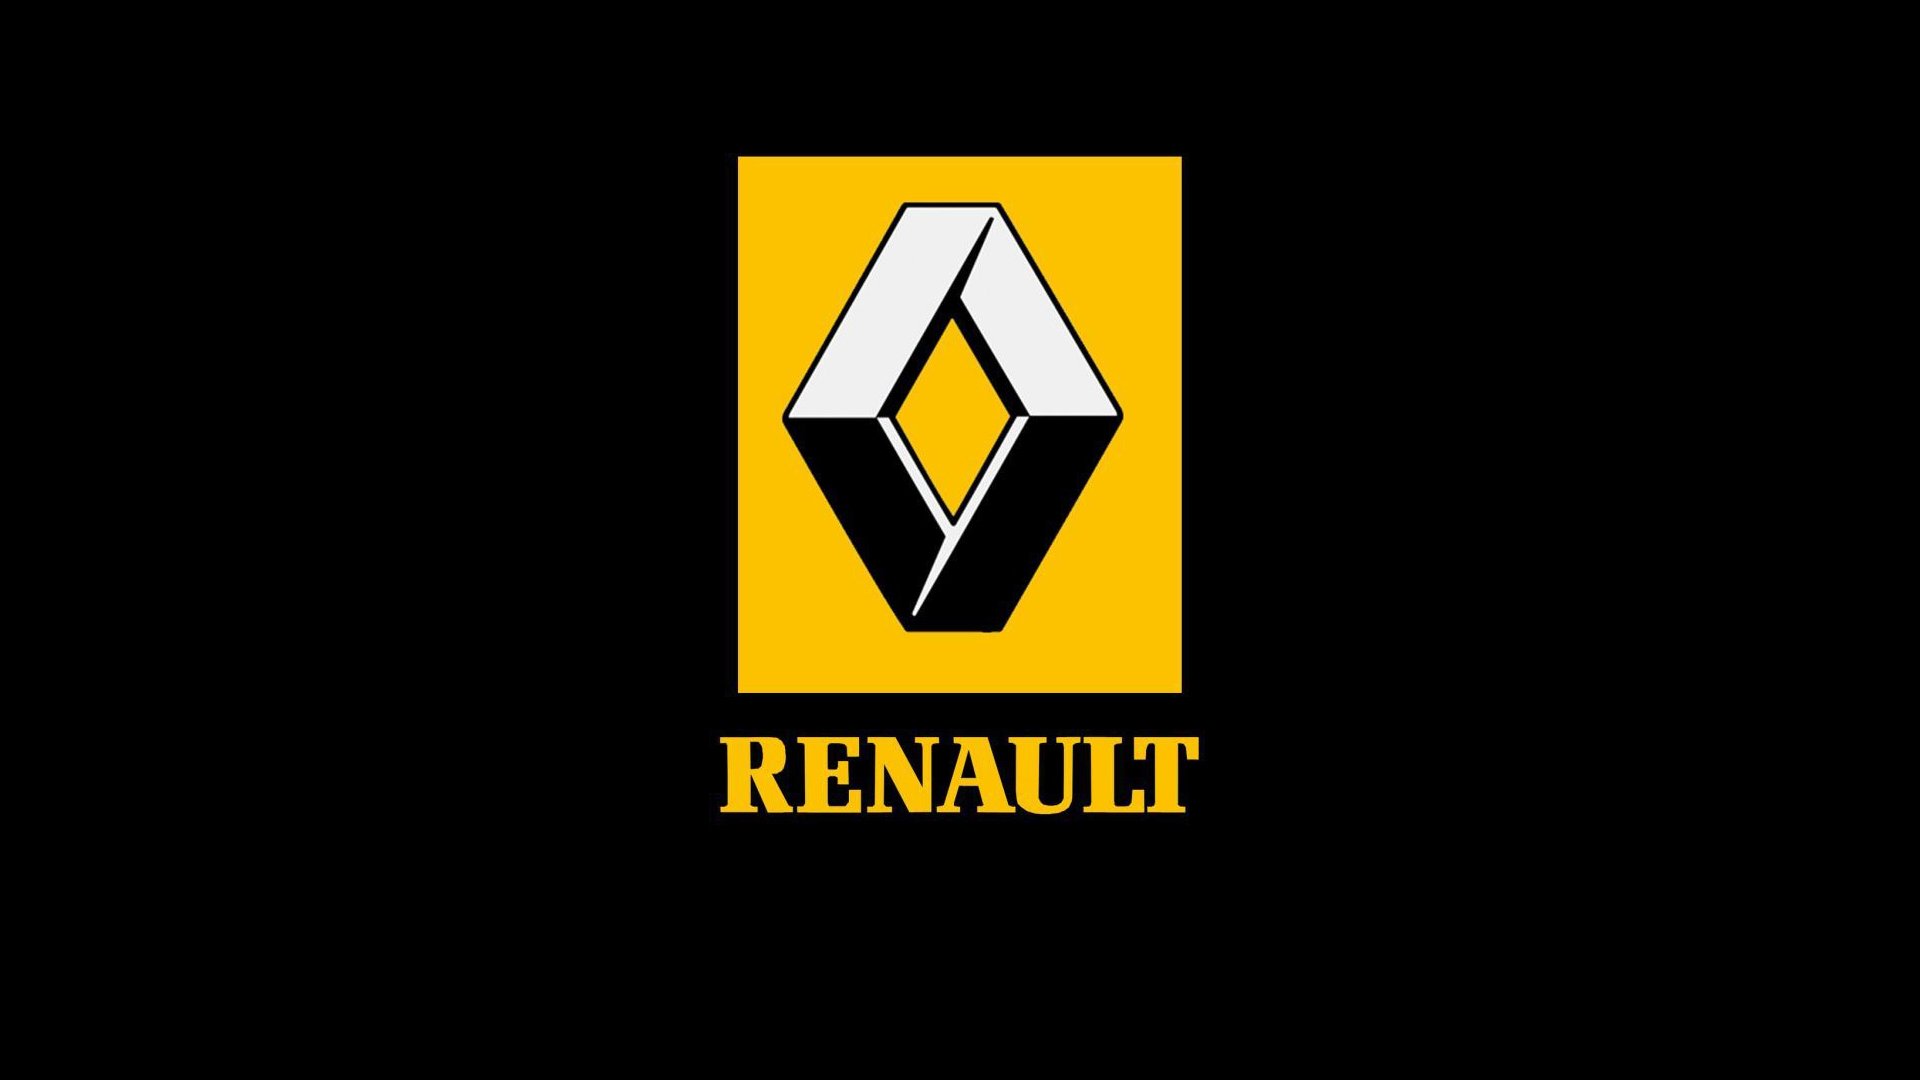 Www renault. Renault логотип. Новый логотип Рено. Рено Логан эмблема. Фирменный знак Рено.